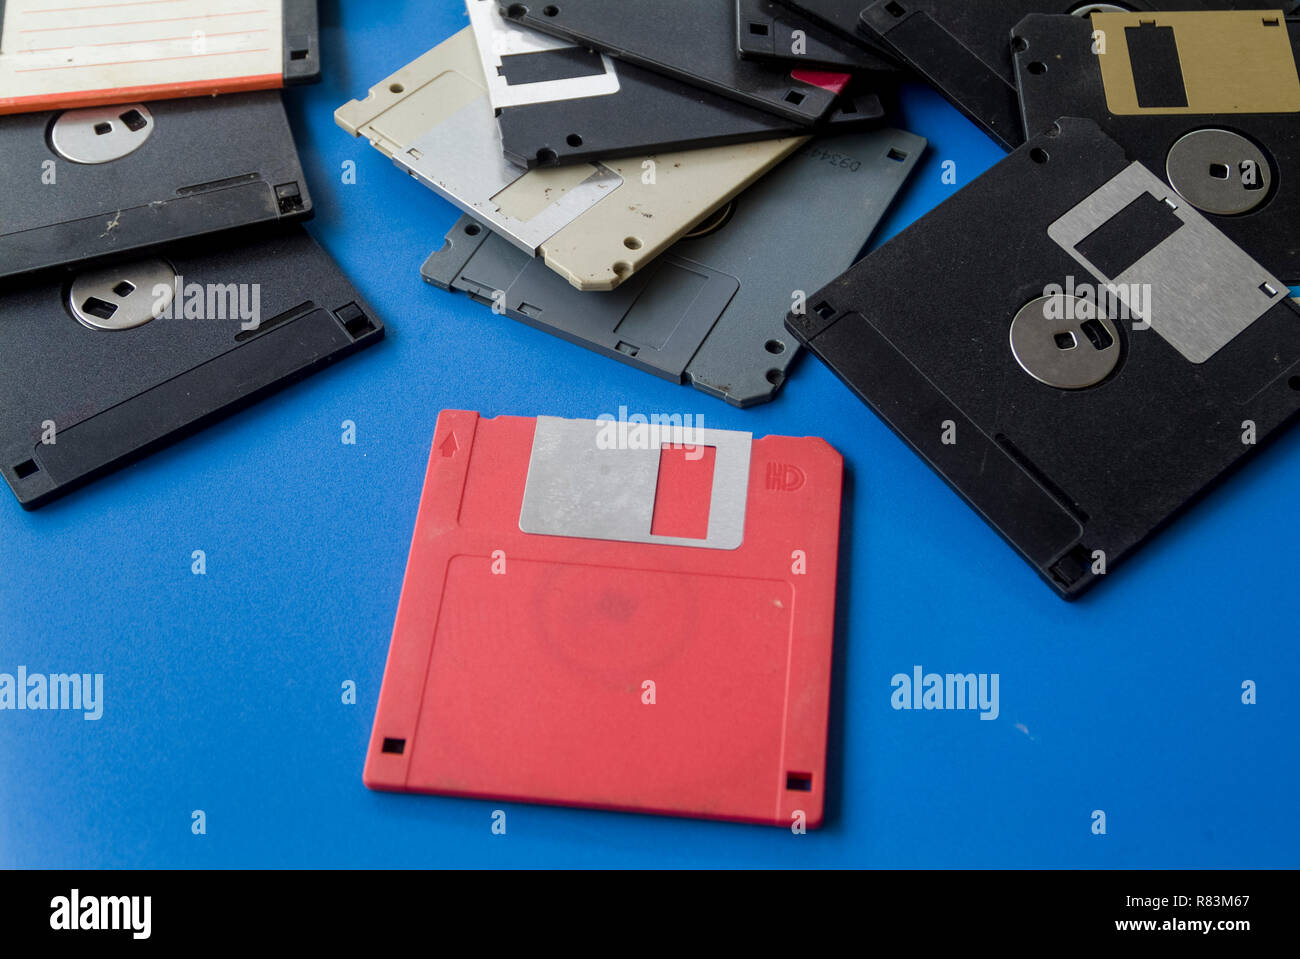 floppy disk 3.5 inch past computer storage Stock Photo